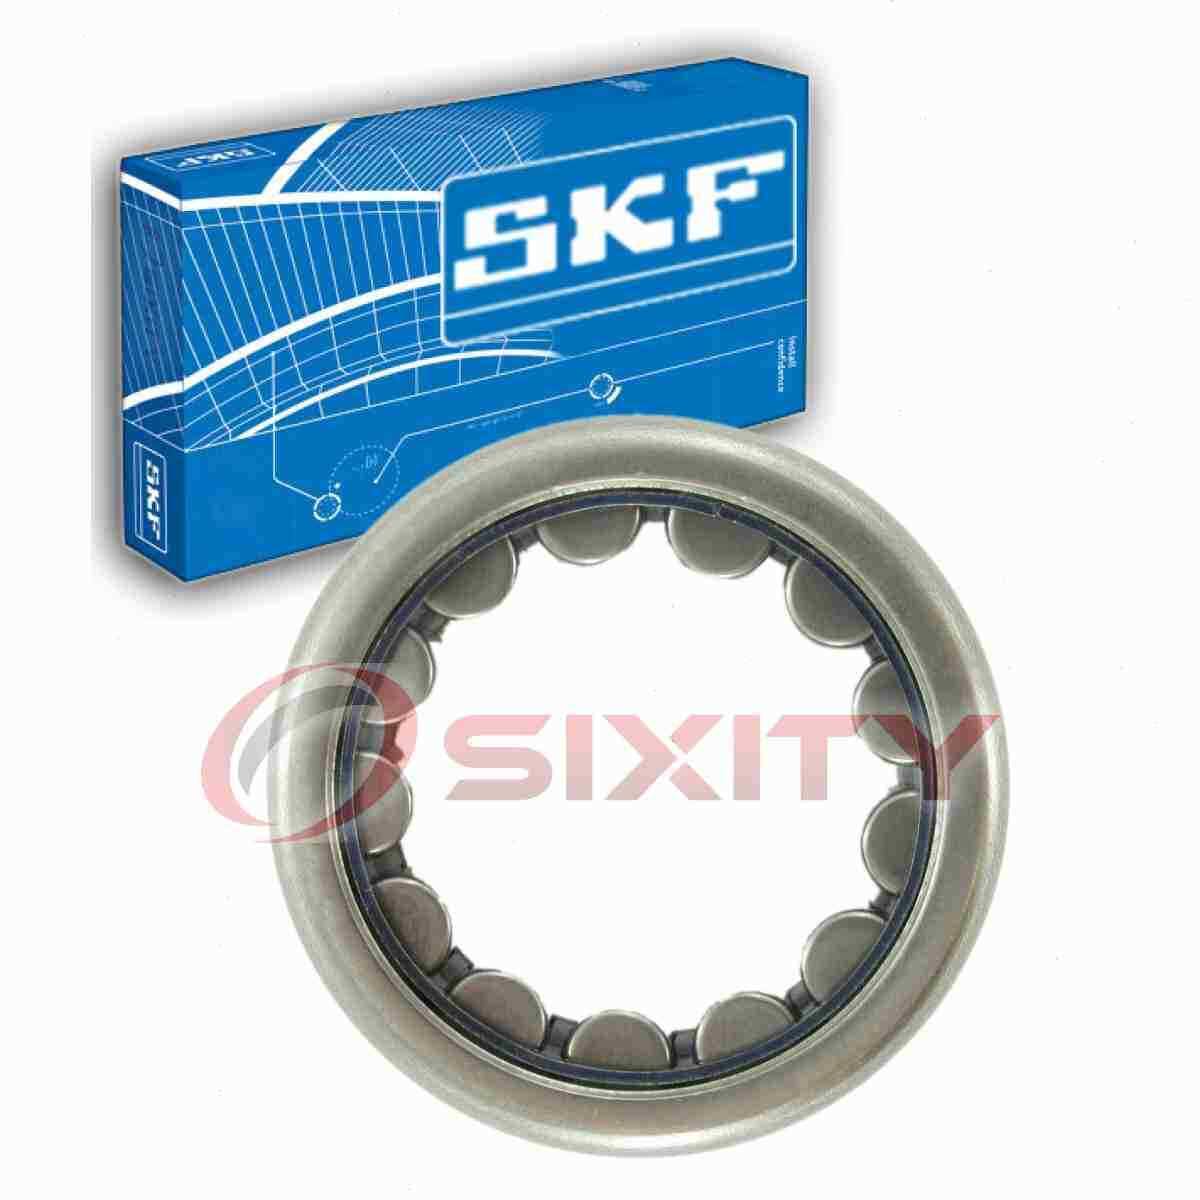 SKF Rear Wheel Bearing for 1978-1987 GMC Caballero Axle Drivetrain Driveline tx